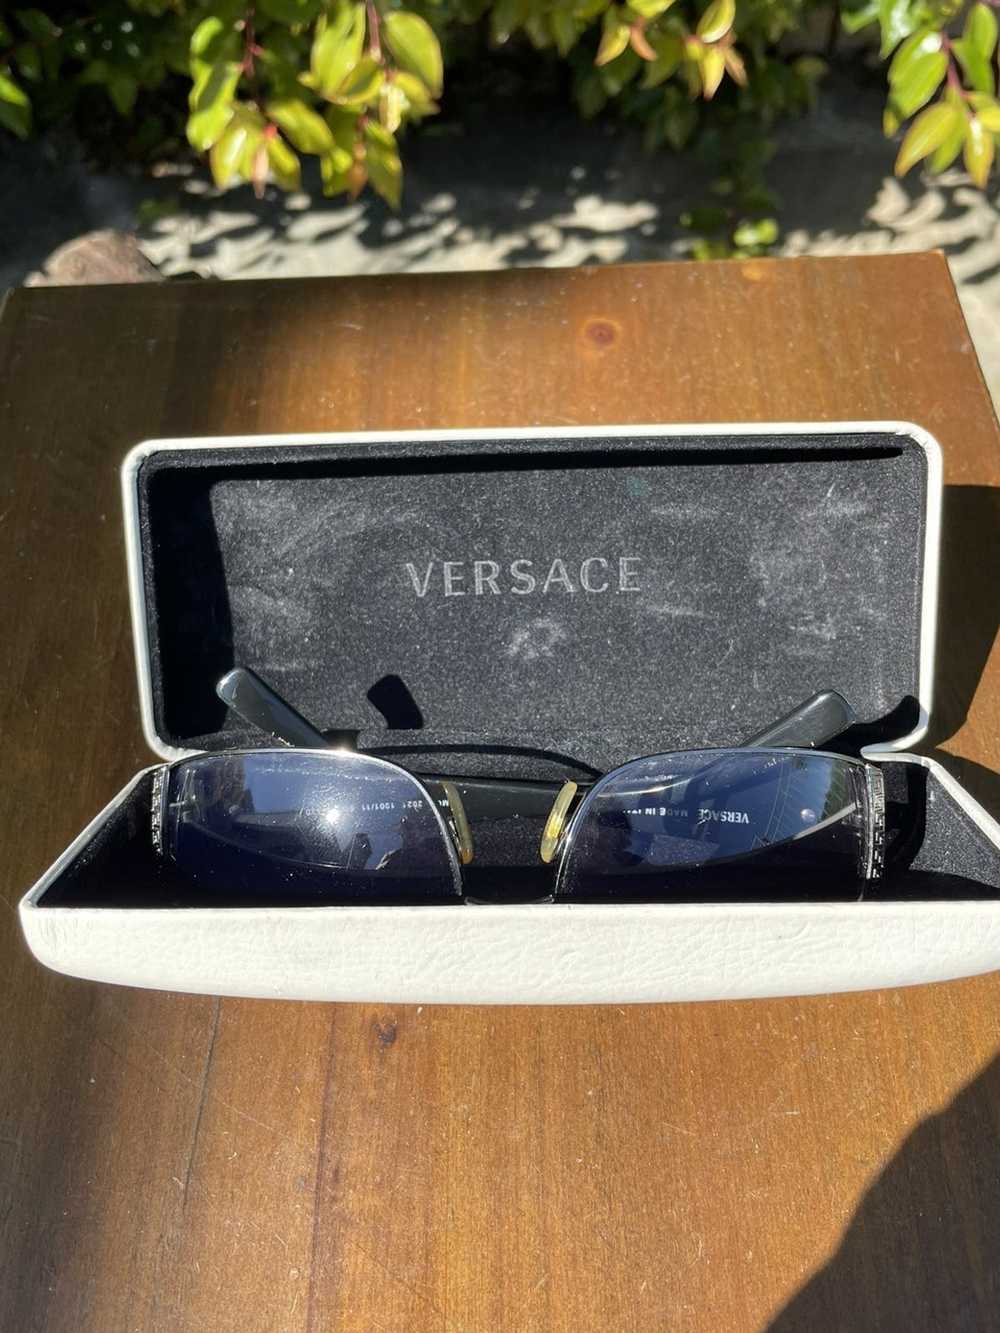 Versace VERSACE SUNGLASSES - image 3